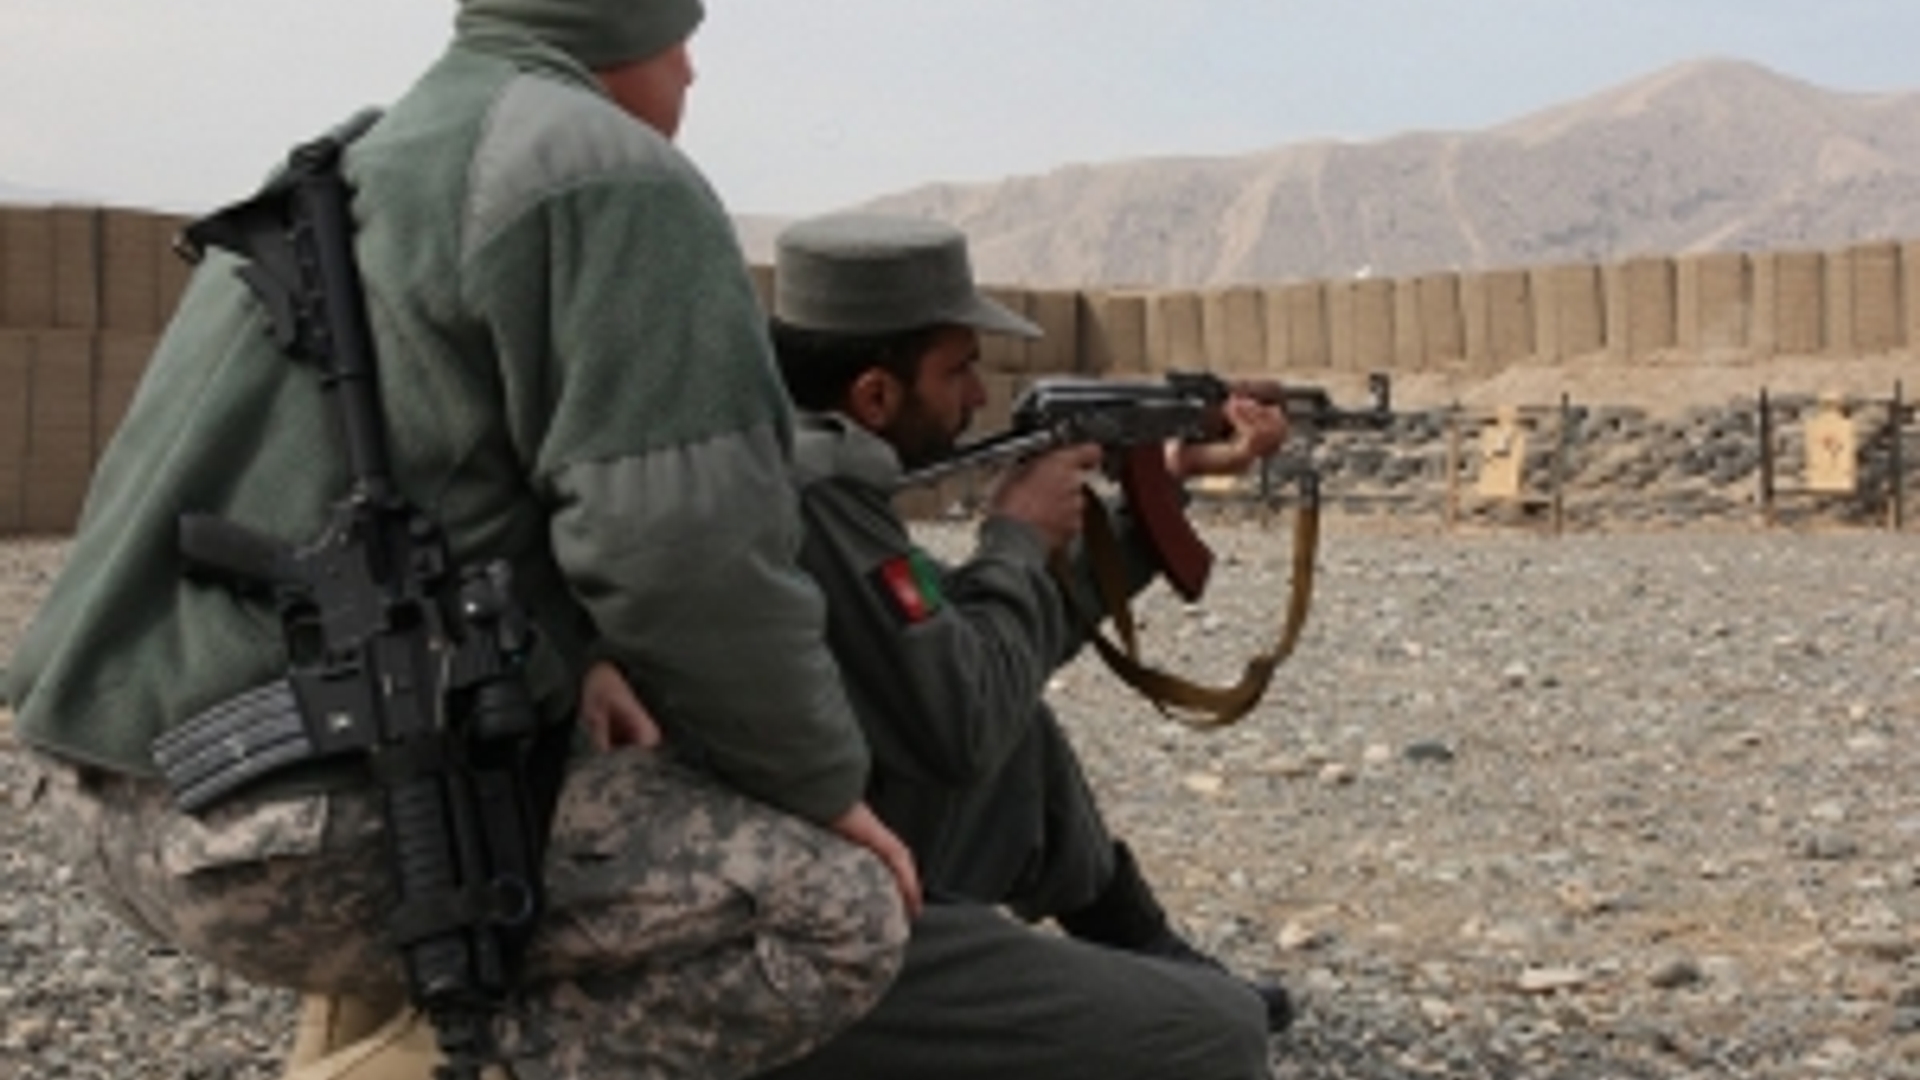 ANP-Afghanpolicetraining_300.jpg